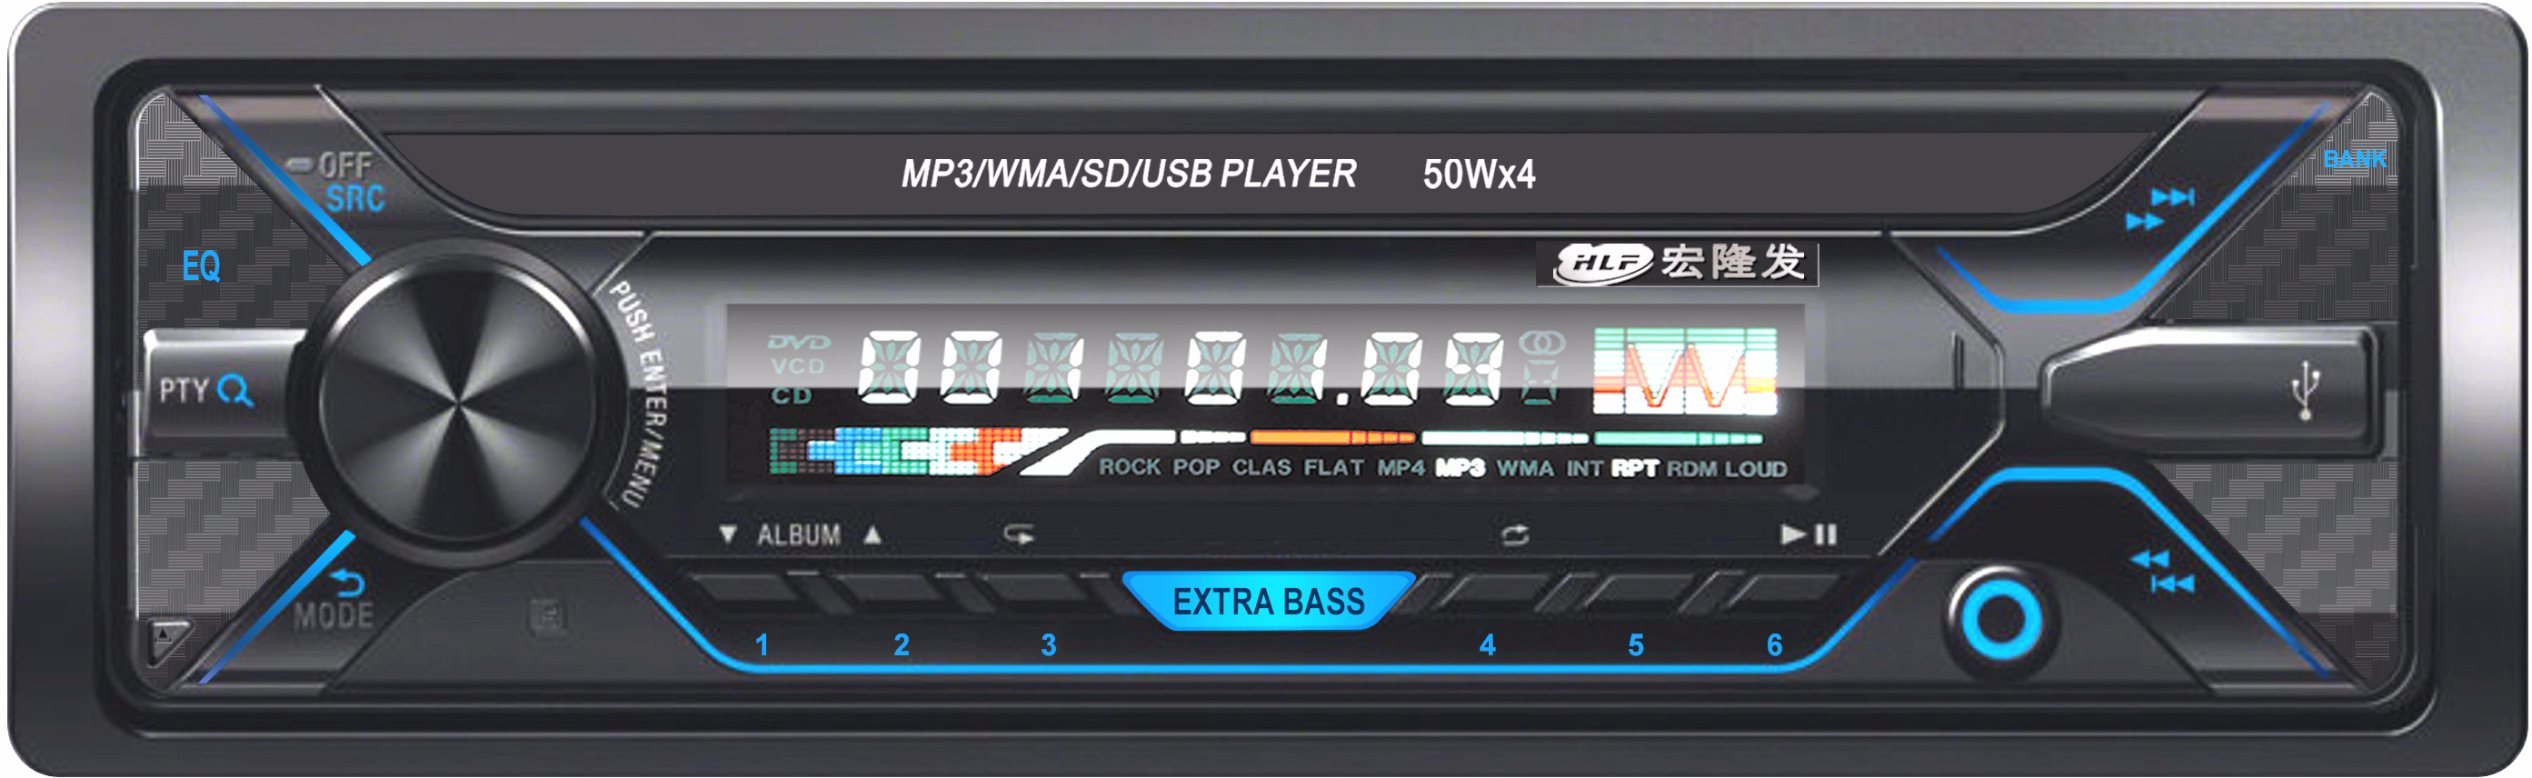 Auto Car MP3 Player One DIN Detachable Panel Car MP3 Player